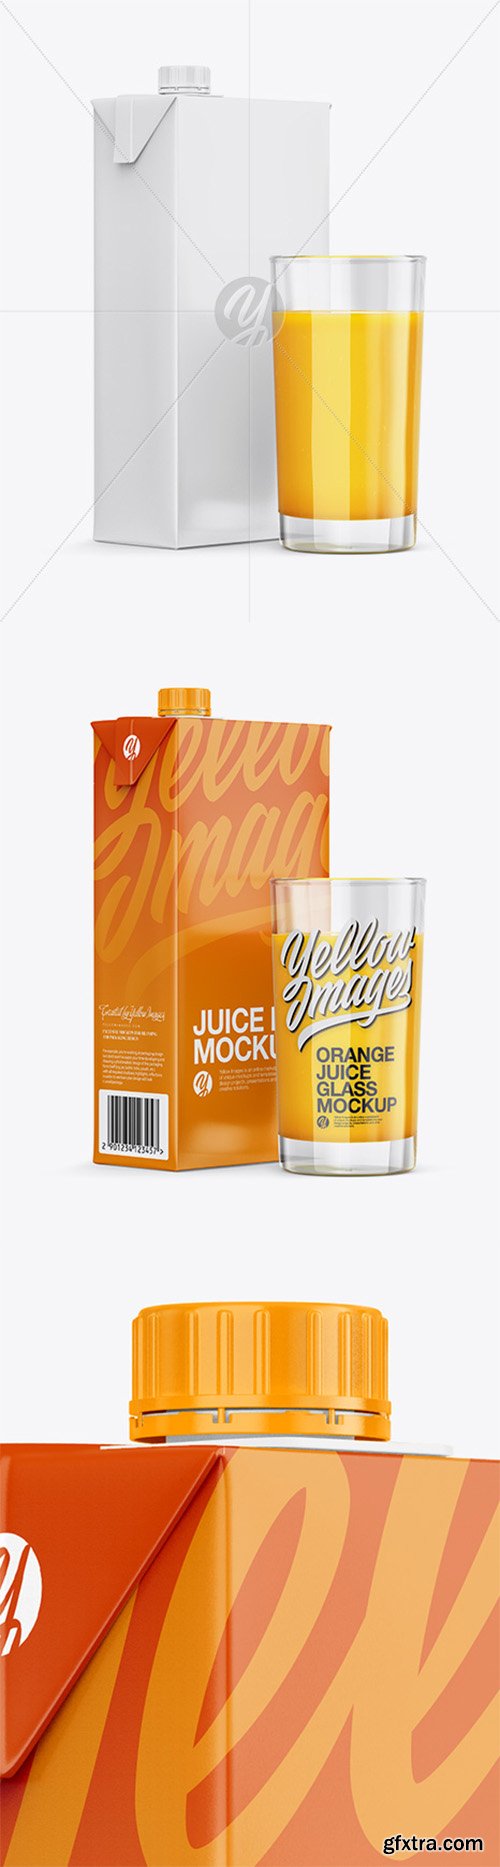 1L Carton Pack With Orange Juice Glass Mockup - Halfside View 24755